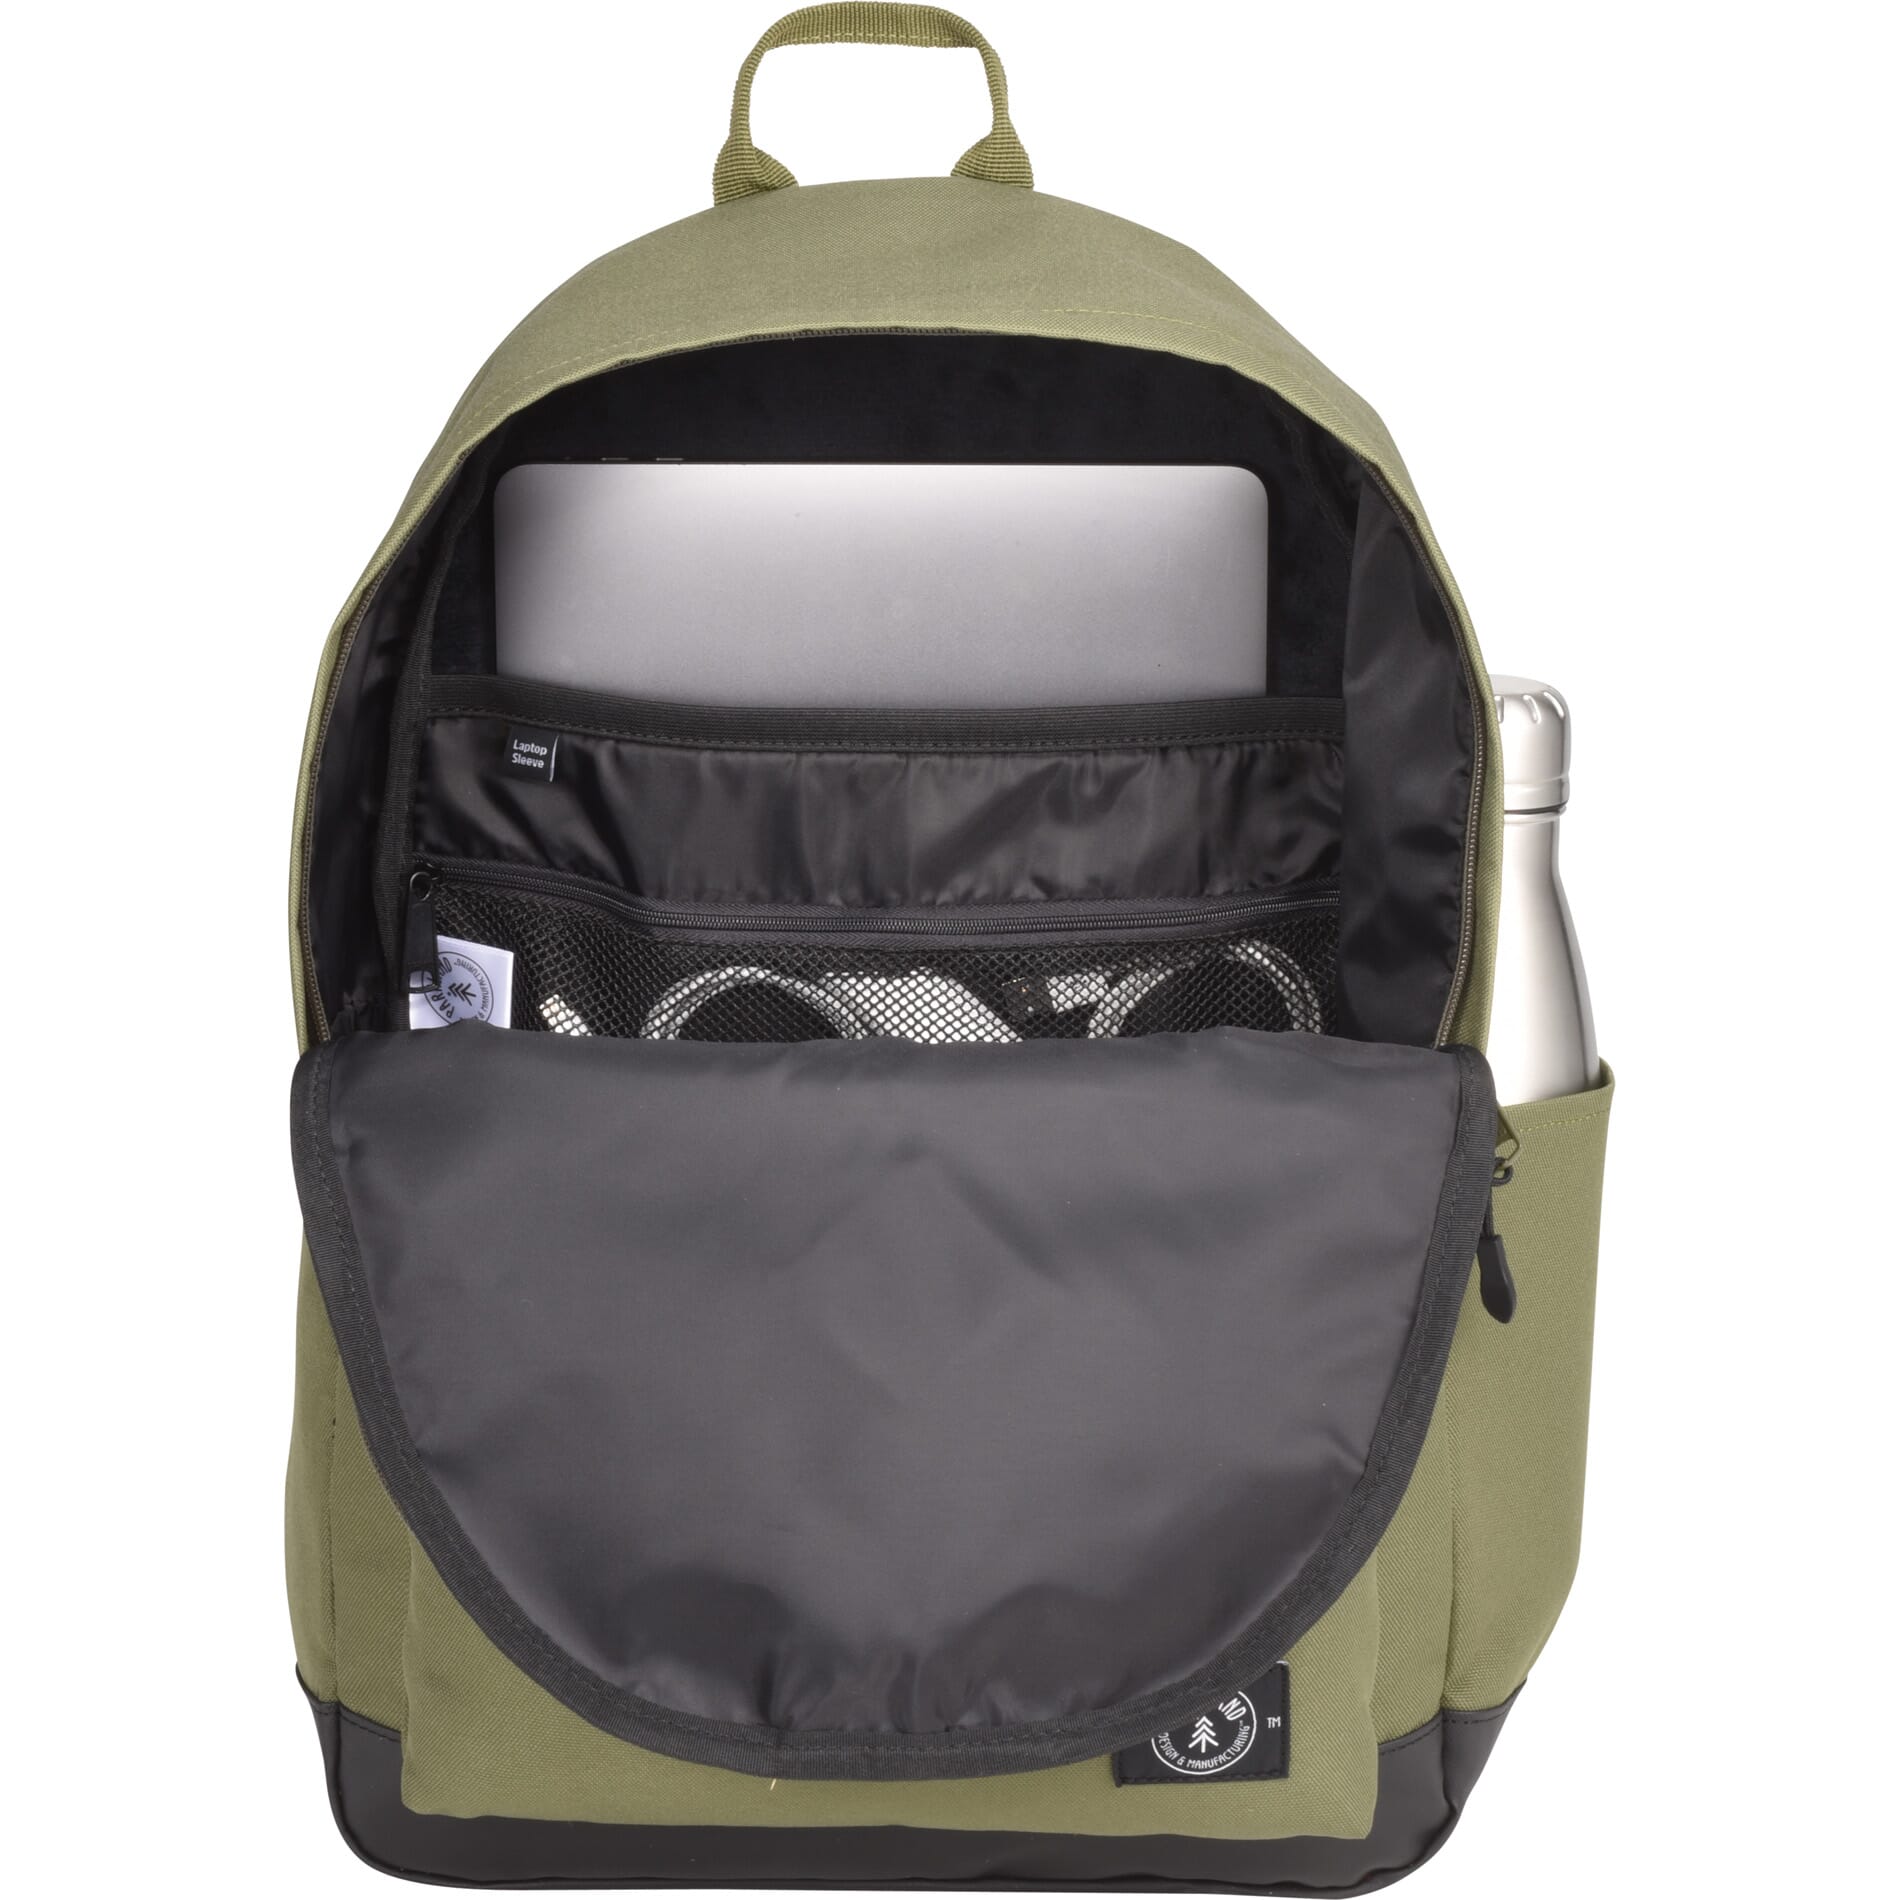 15 Parkland Kingston Plus Computer Backpack - Promotional Giveaway